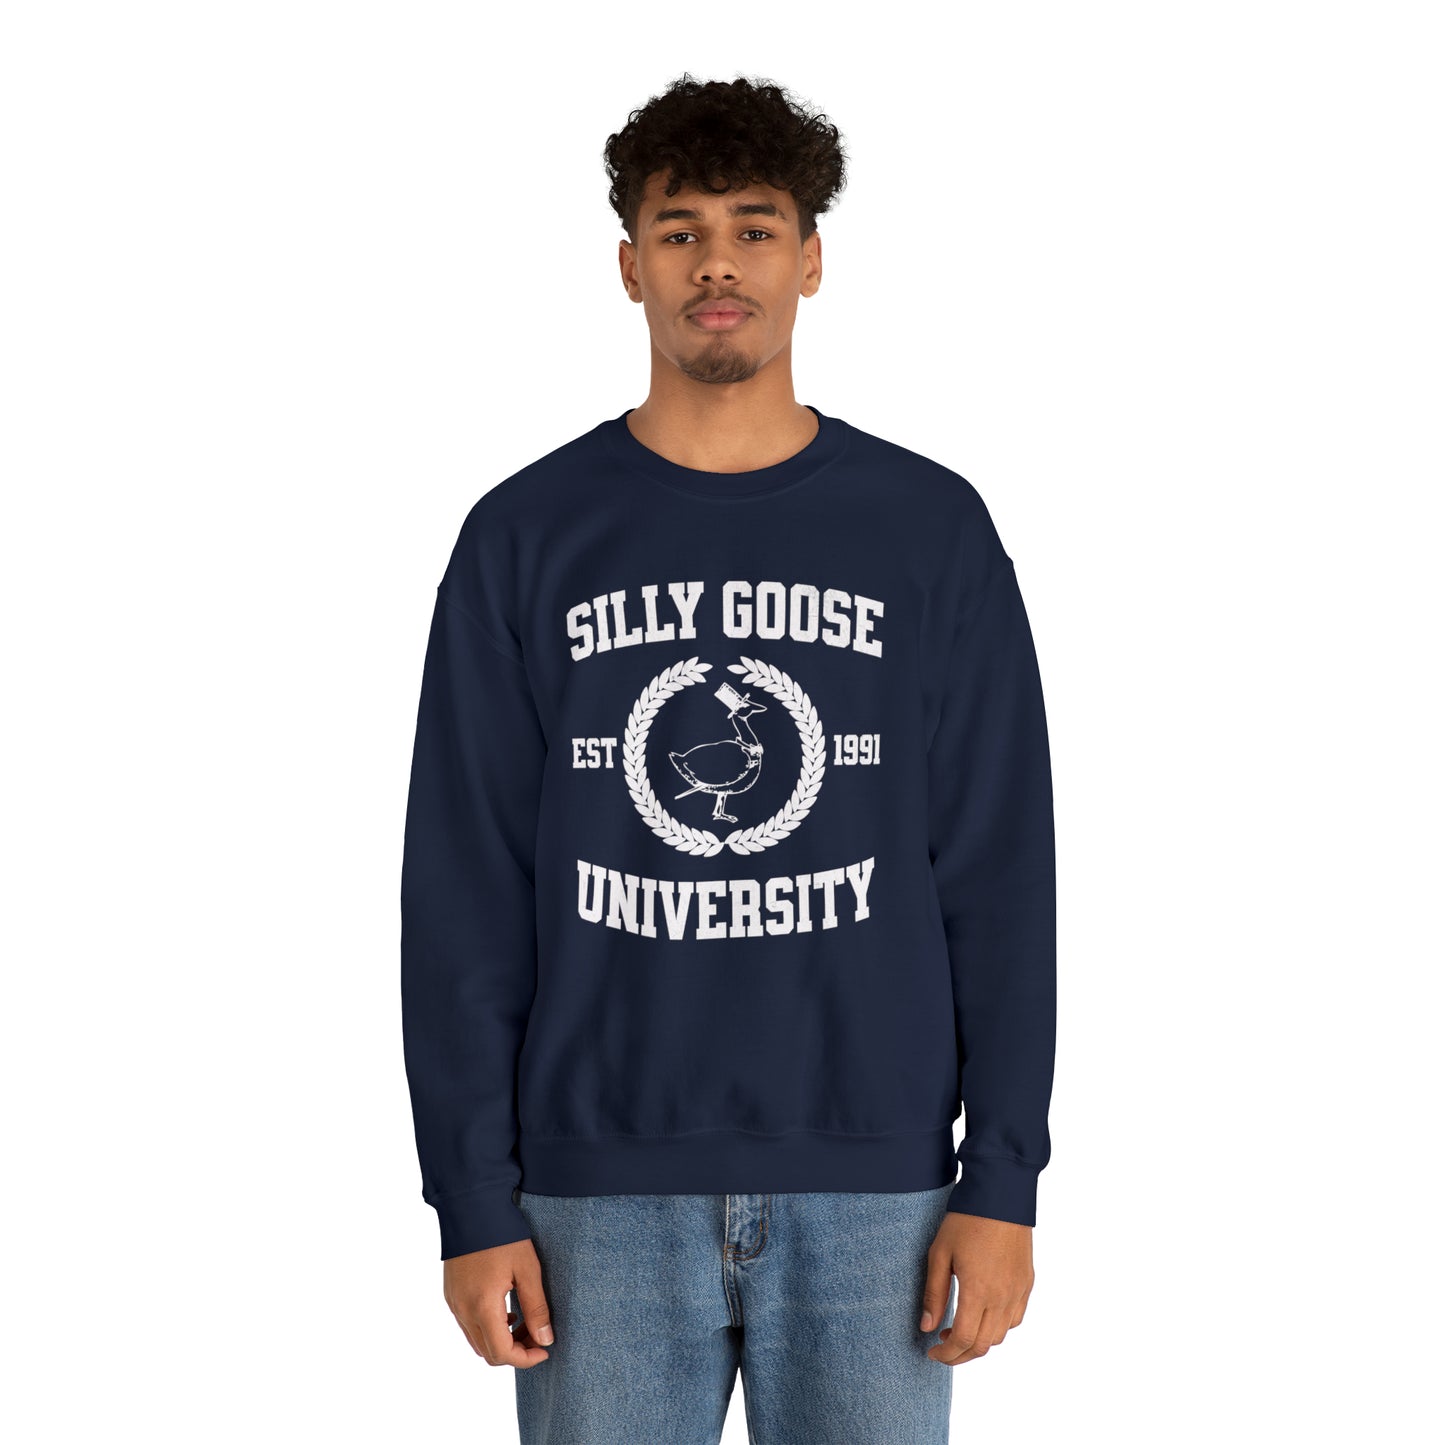 Adult "Silly Goose University" Collegiate Unisex Crewneck Sweatshirt